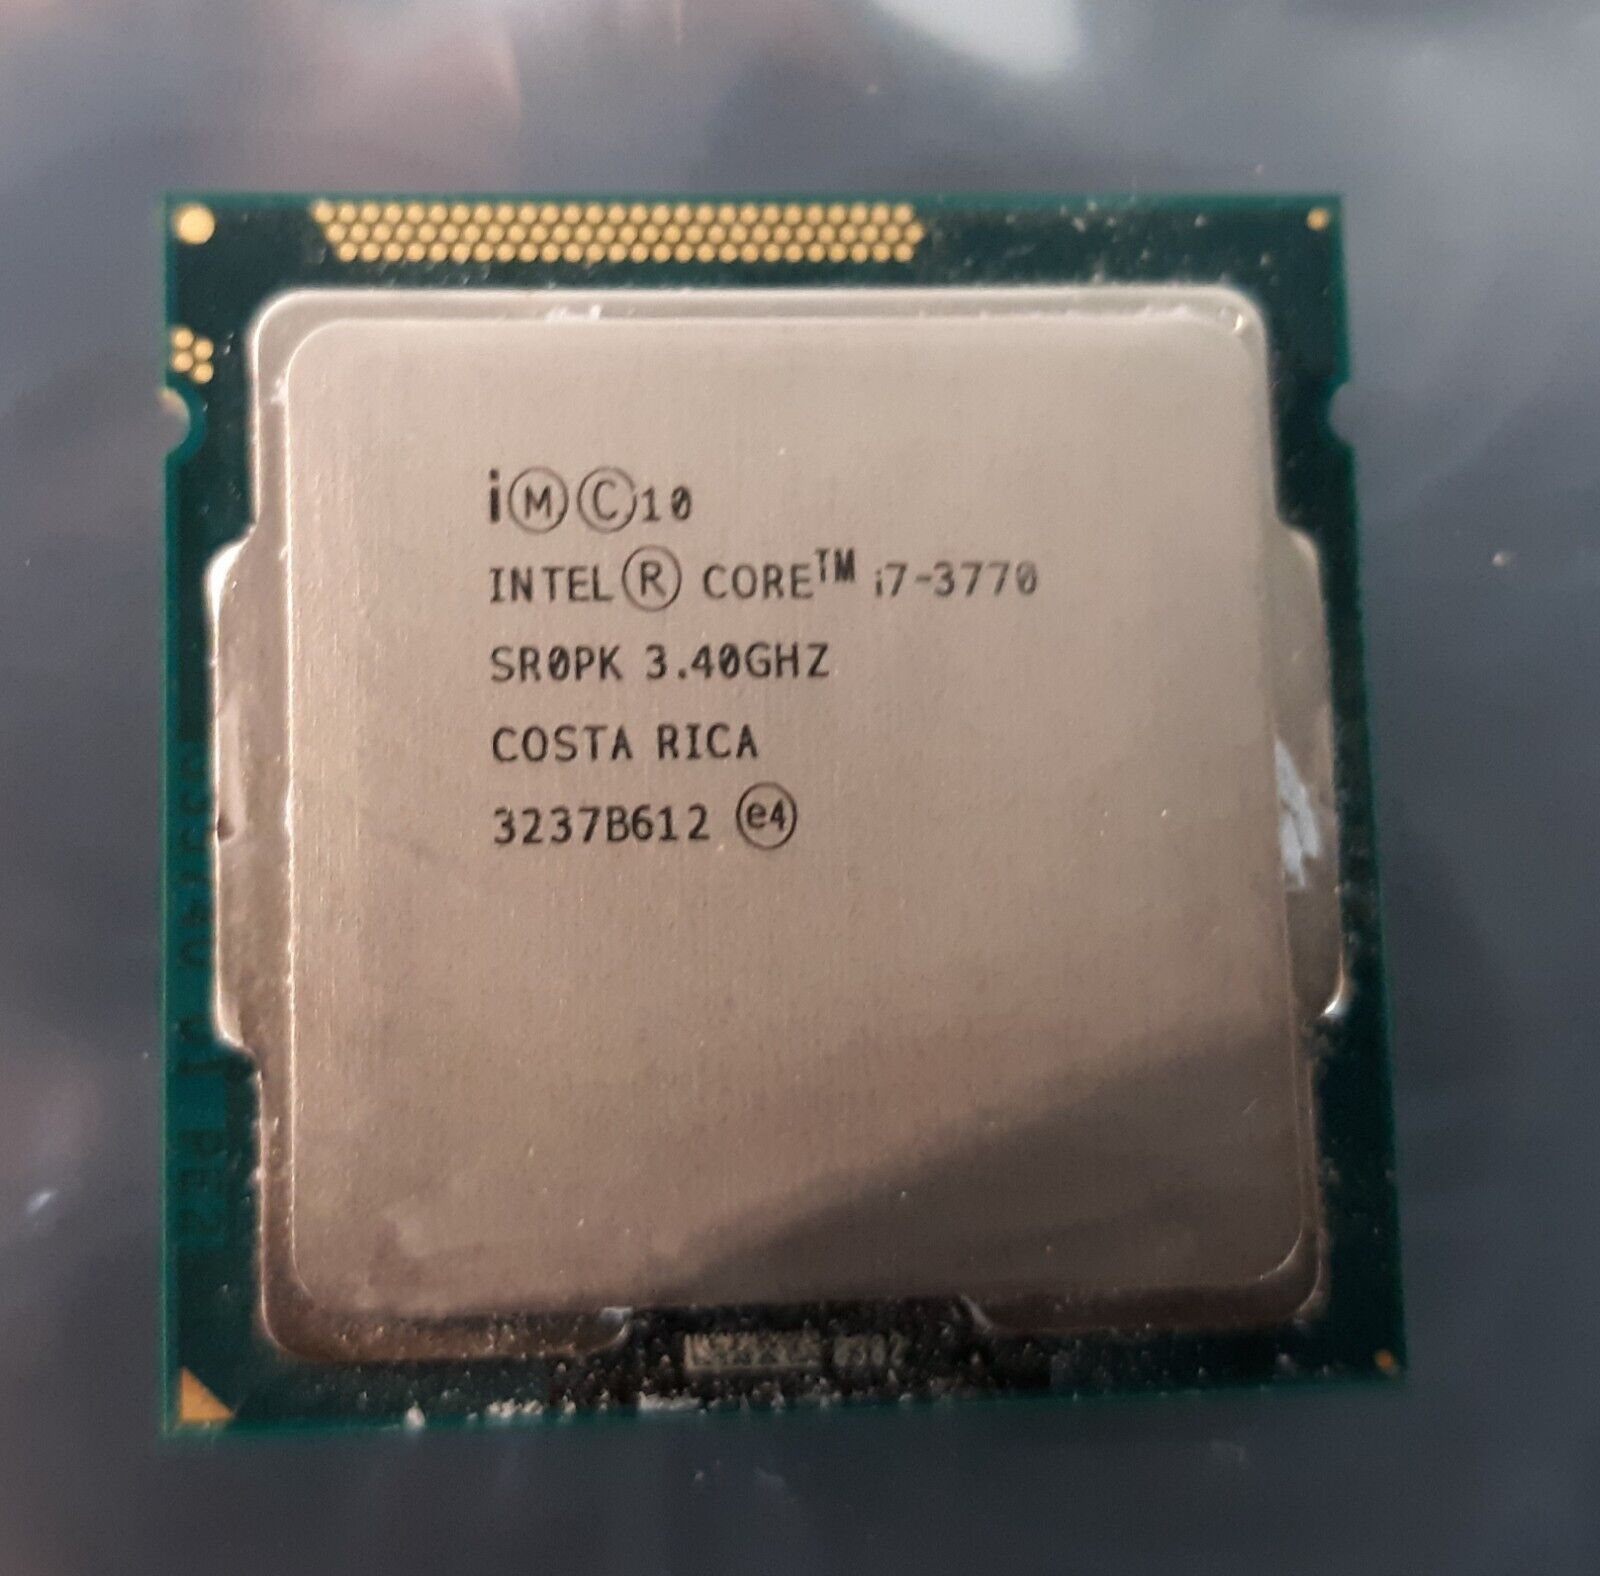 Intel Core i7-3770 SR0PK 3.40GHz CPU Processor *AS IS*